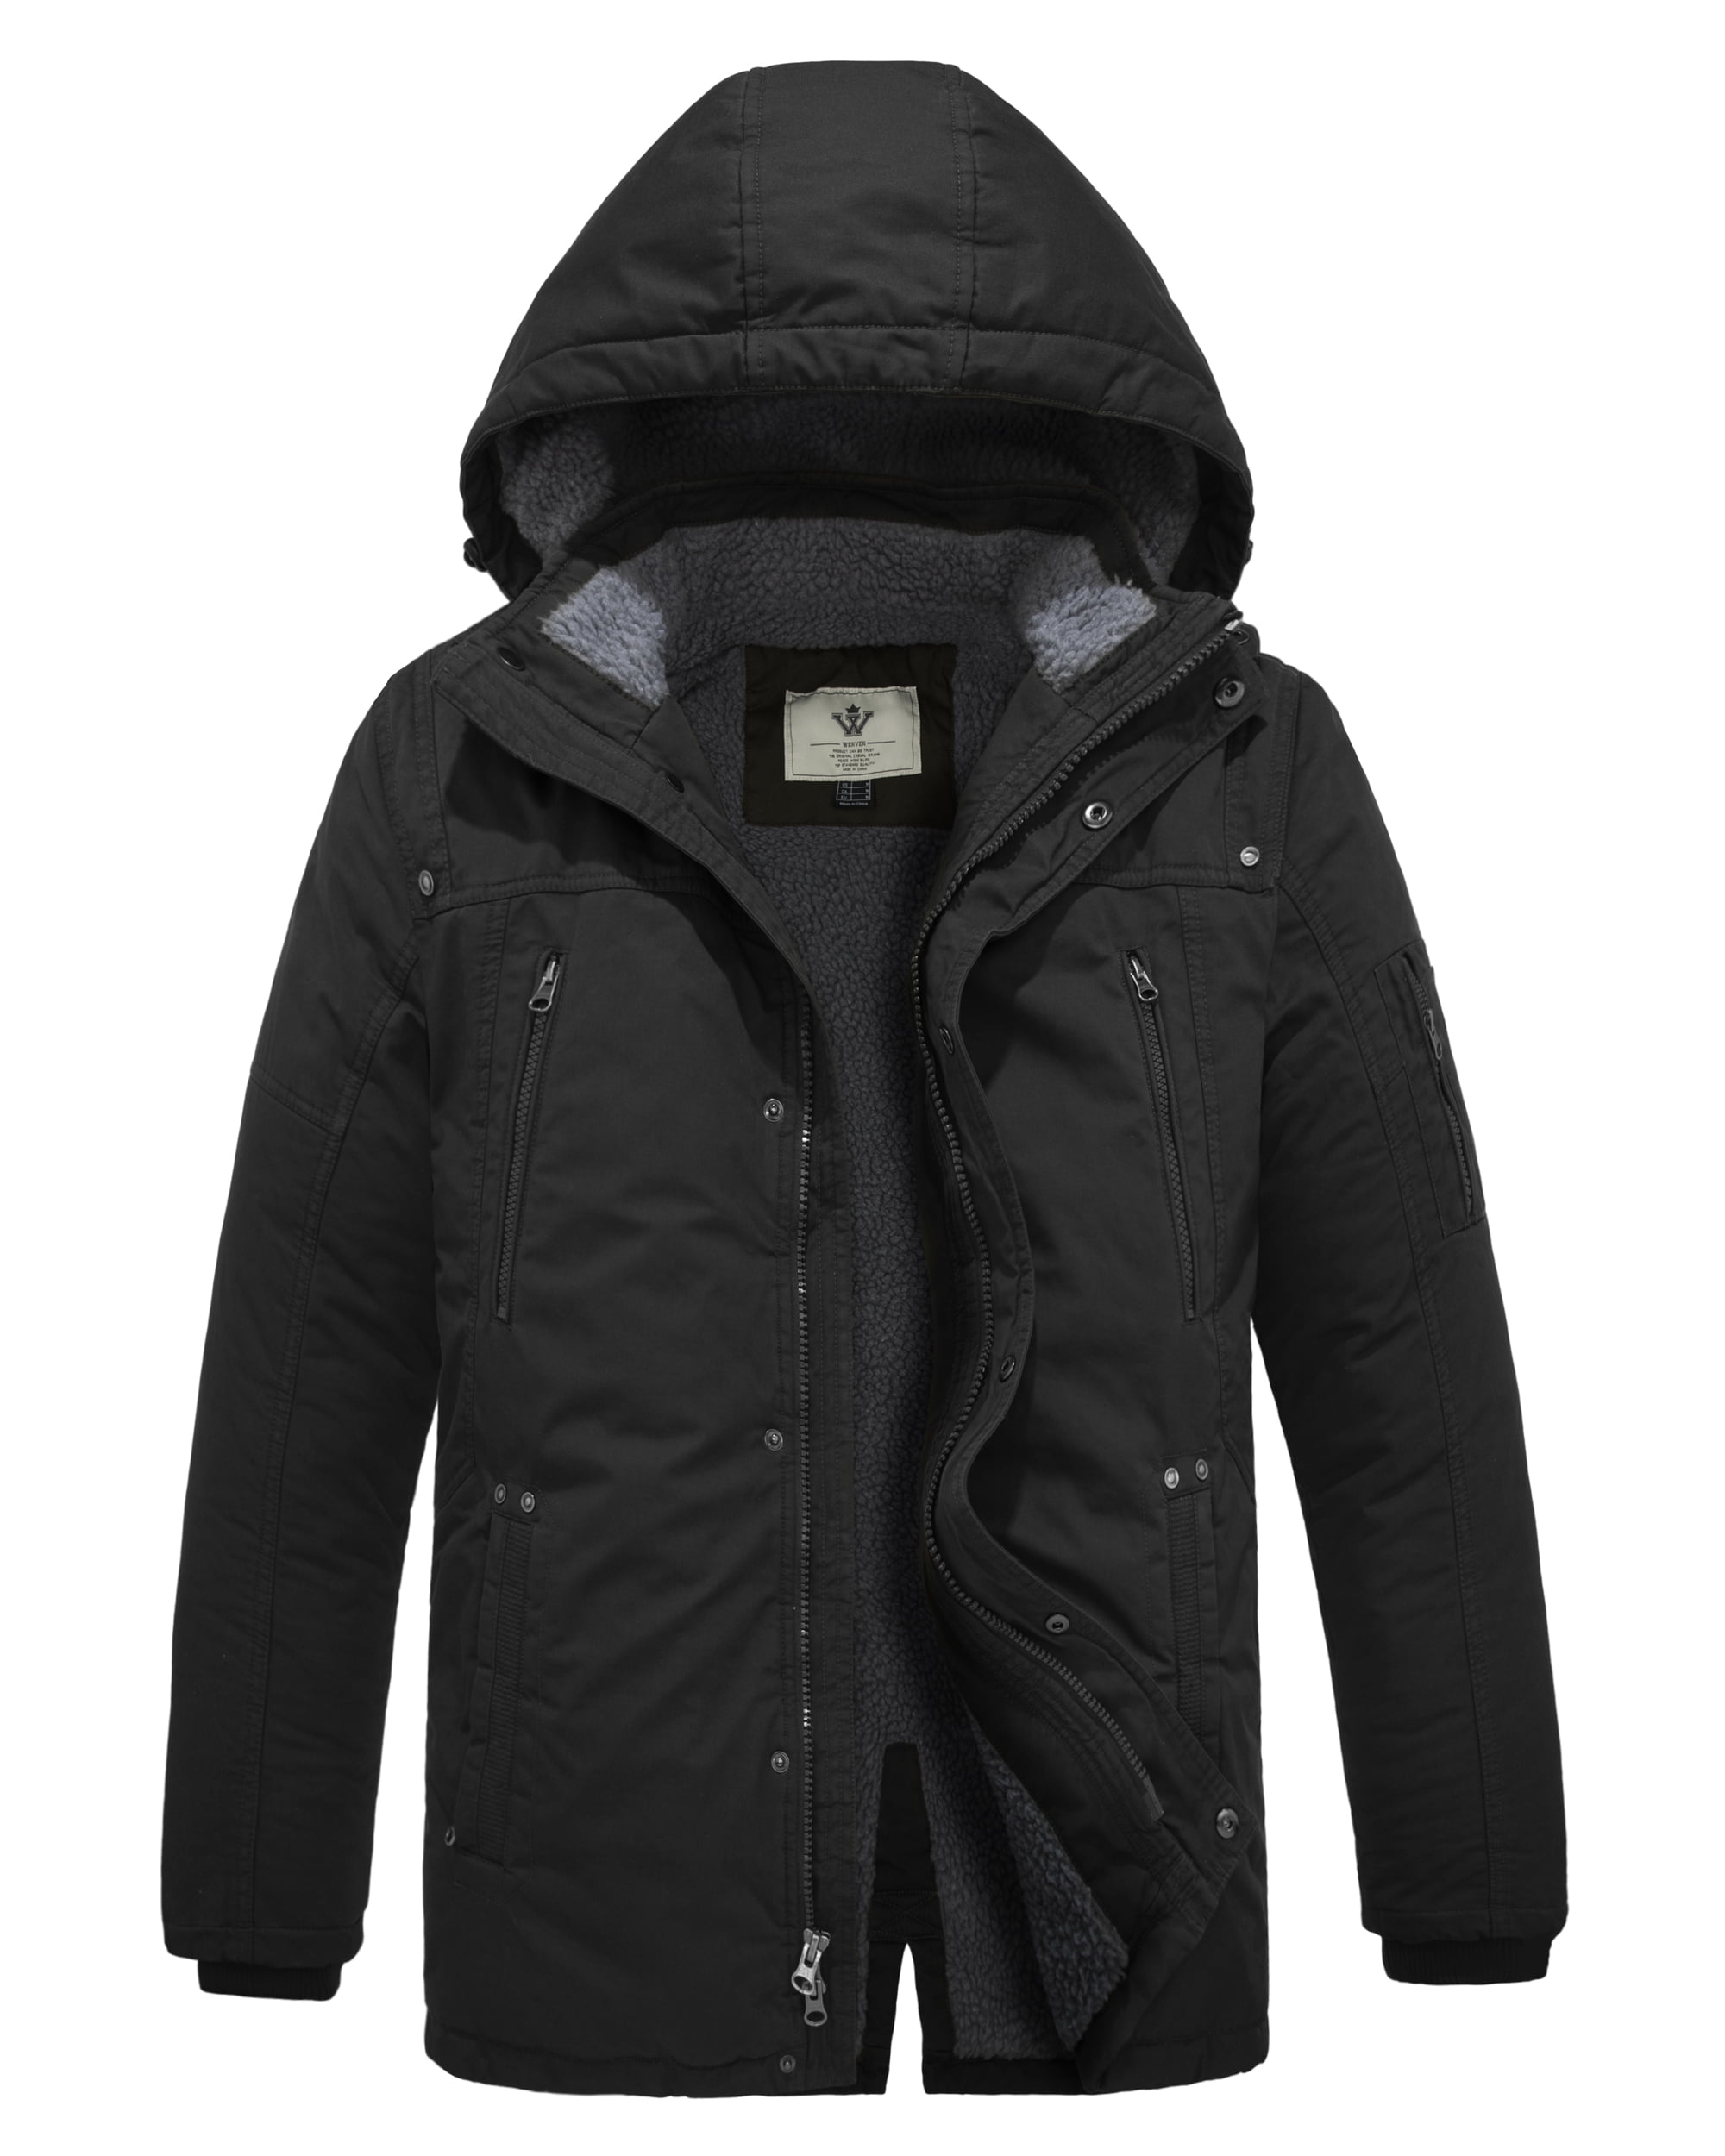 WenVen Men's Winter Parka Jacket Windproof Puffer Coat Warm Hooded ...